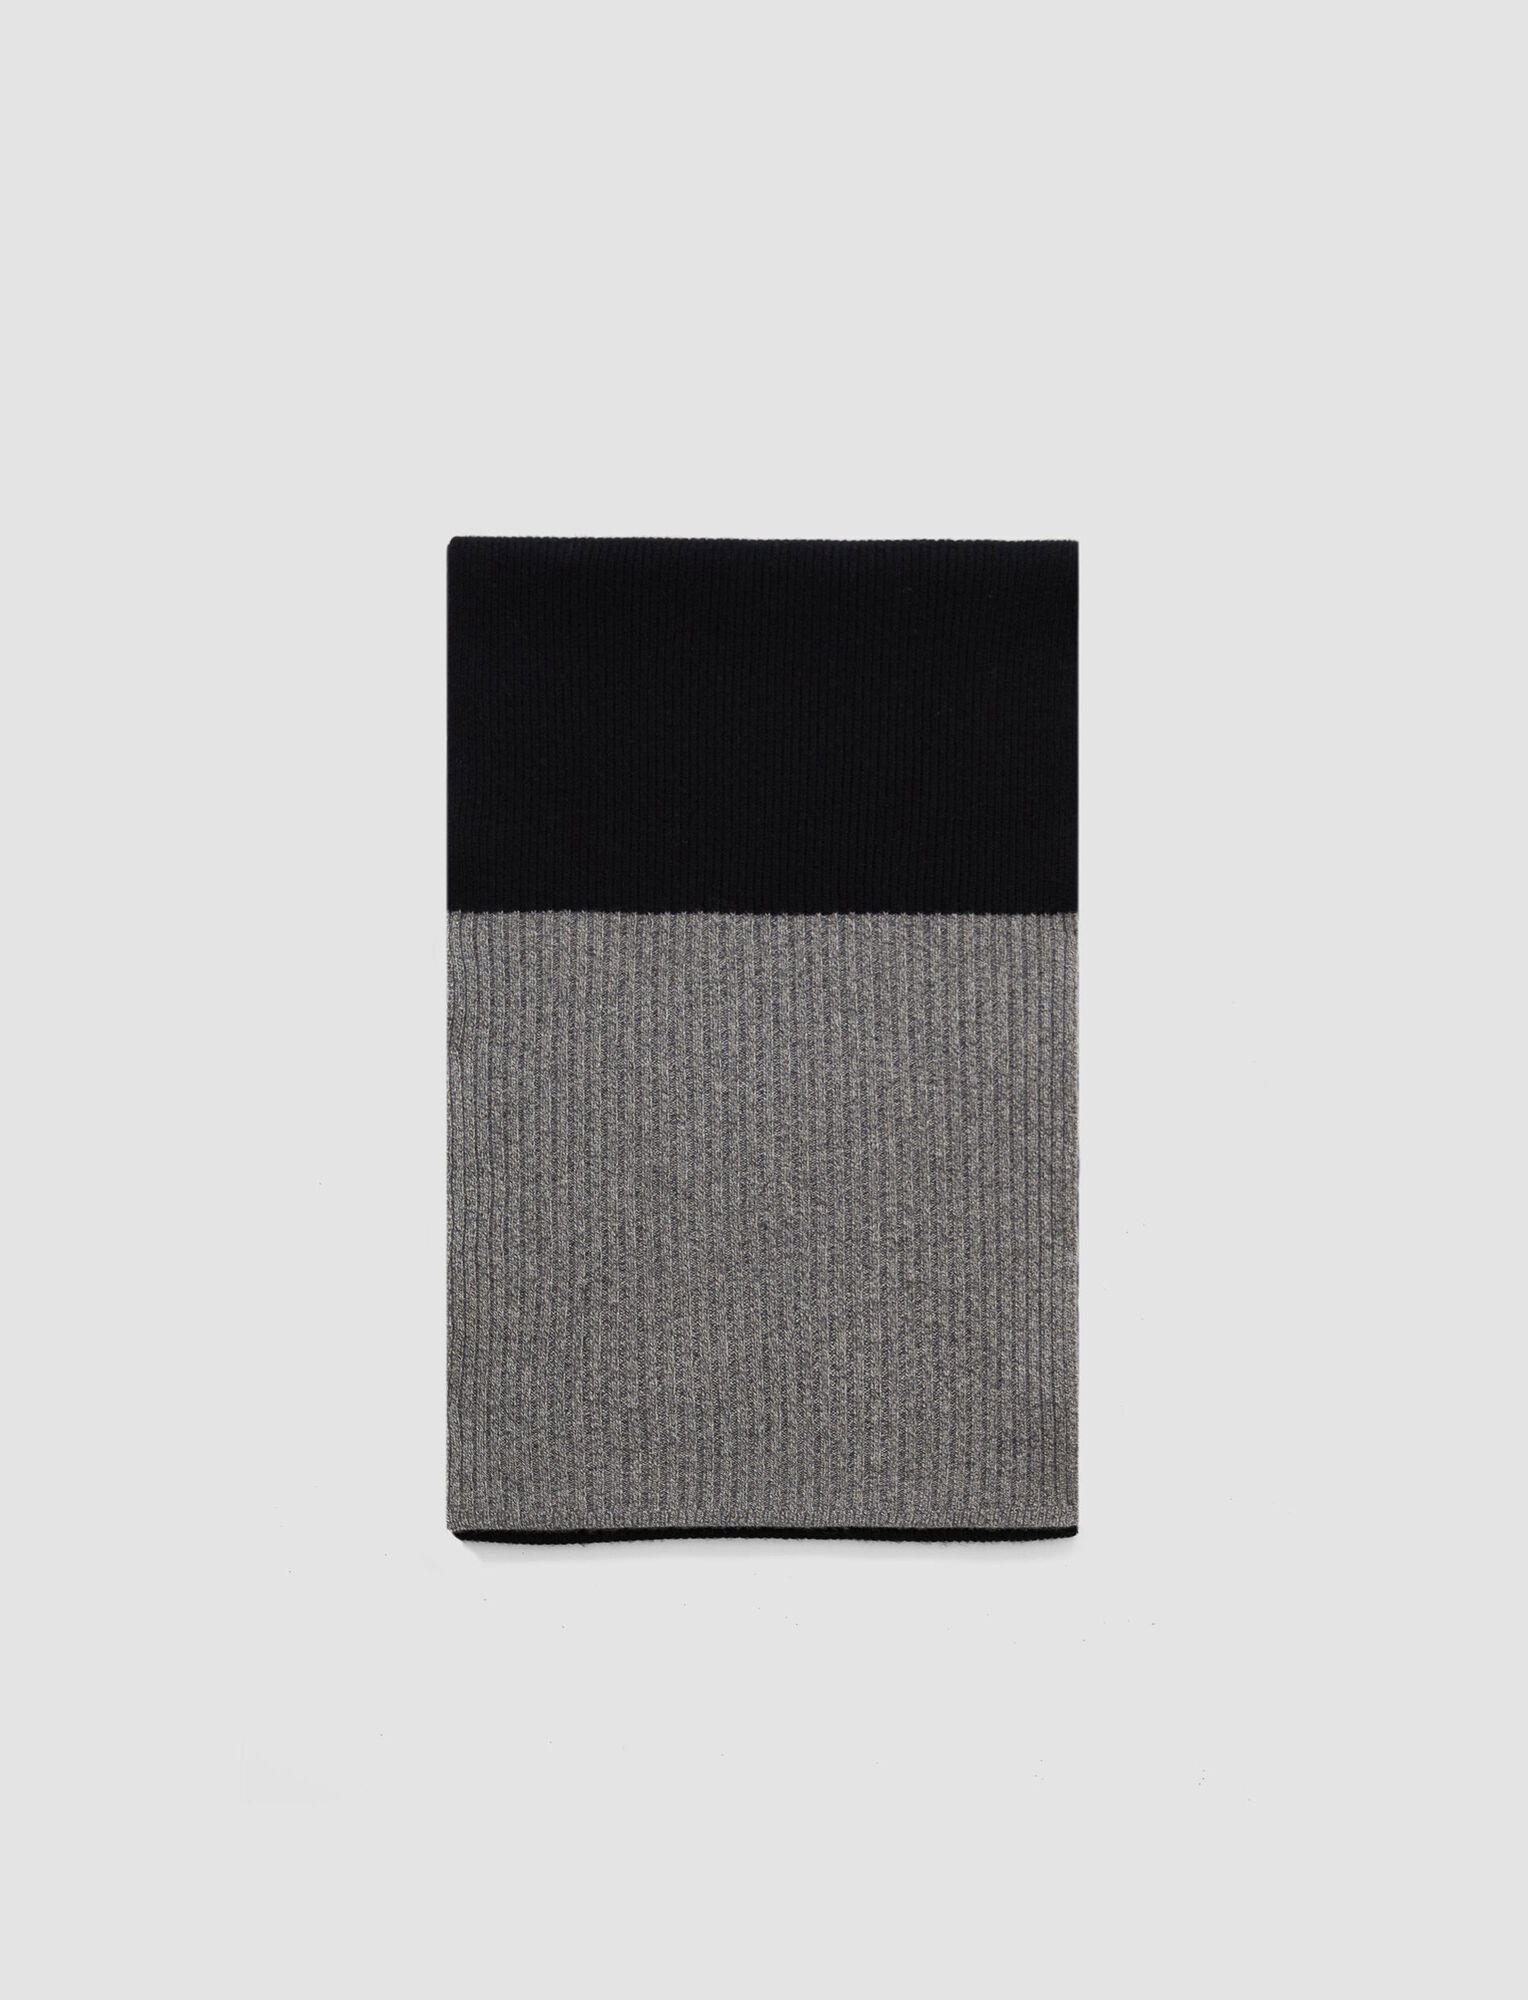 Joseph, Colour Block Scarf, in Black/Grey